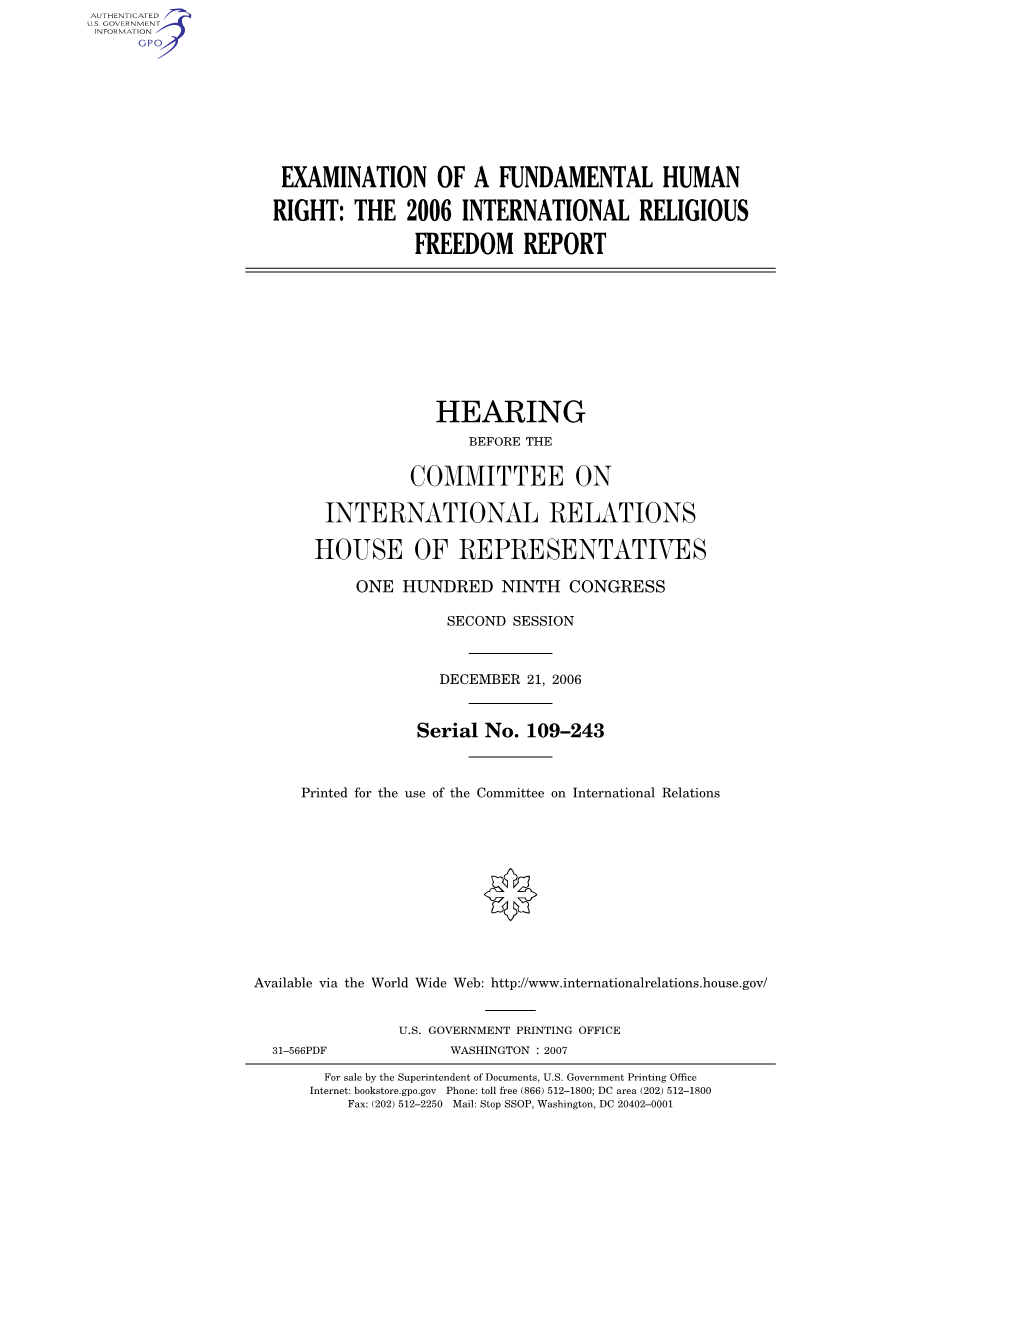 The 2006 International Religious Freedom Report